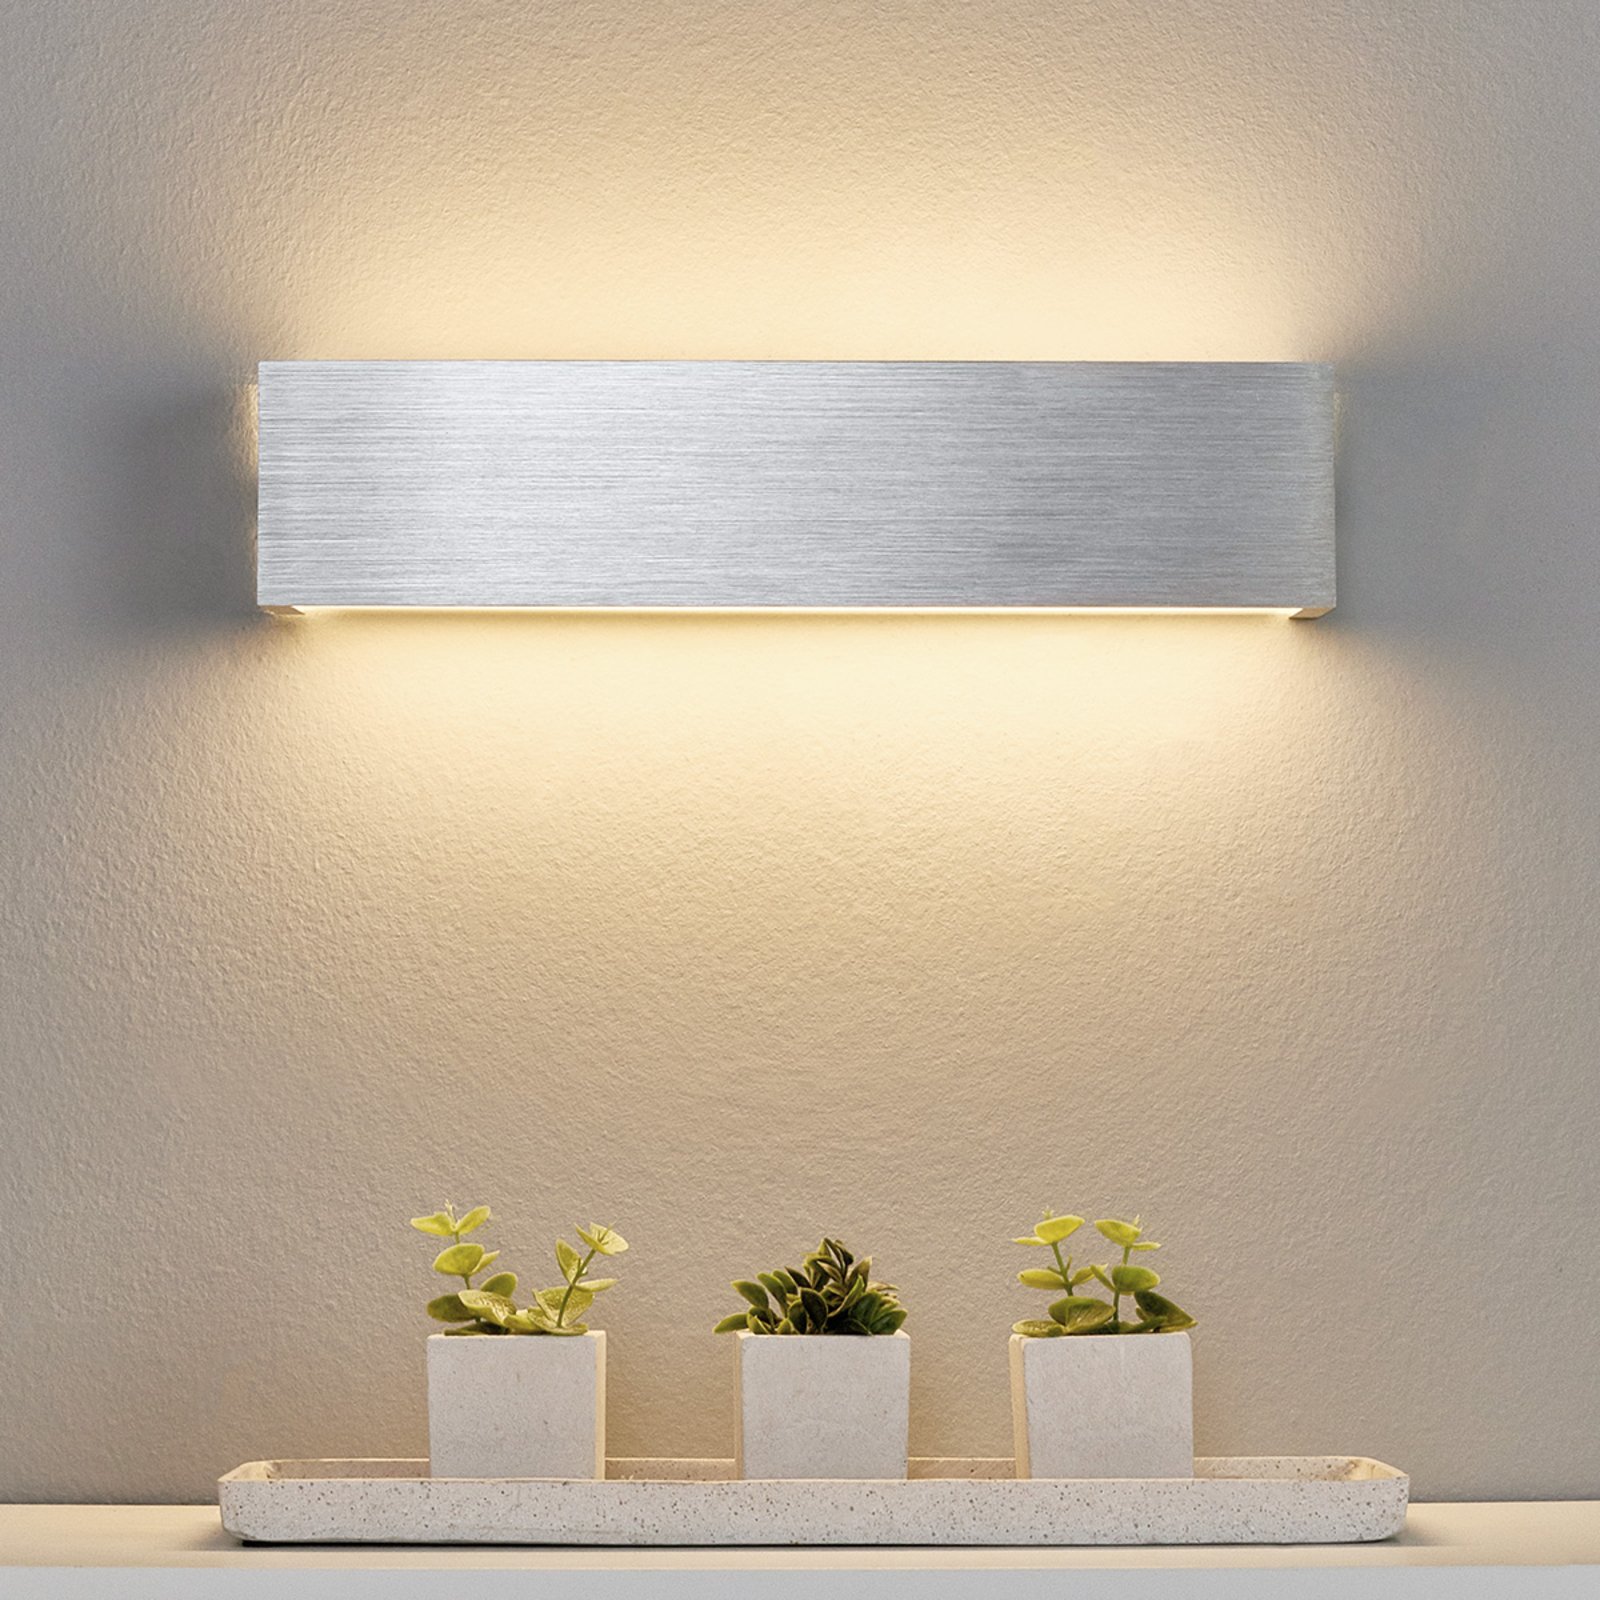 Aluminium-coloured LED wall light Ranik